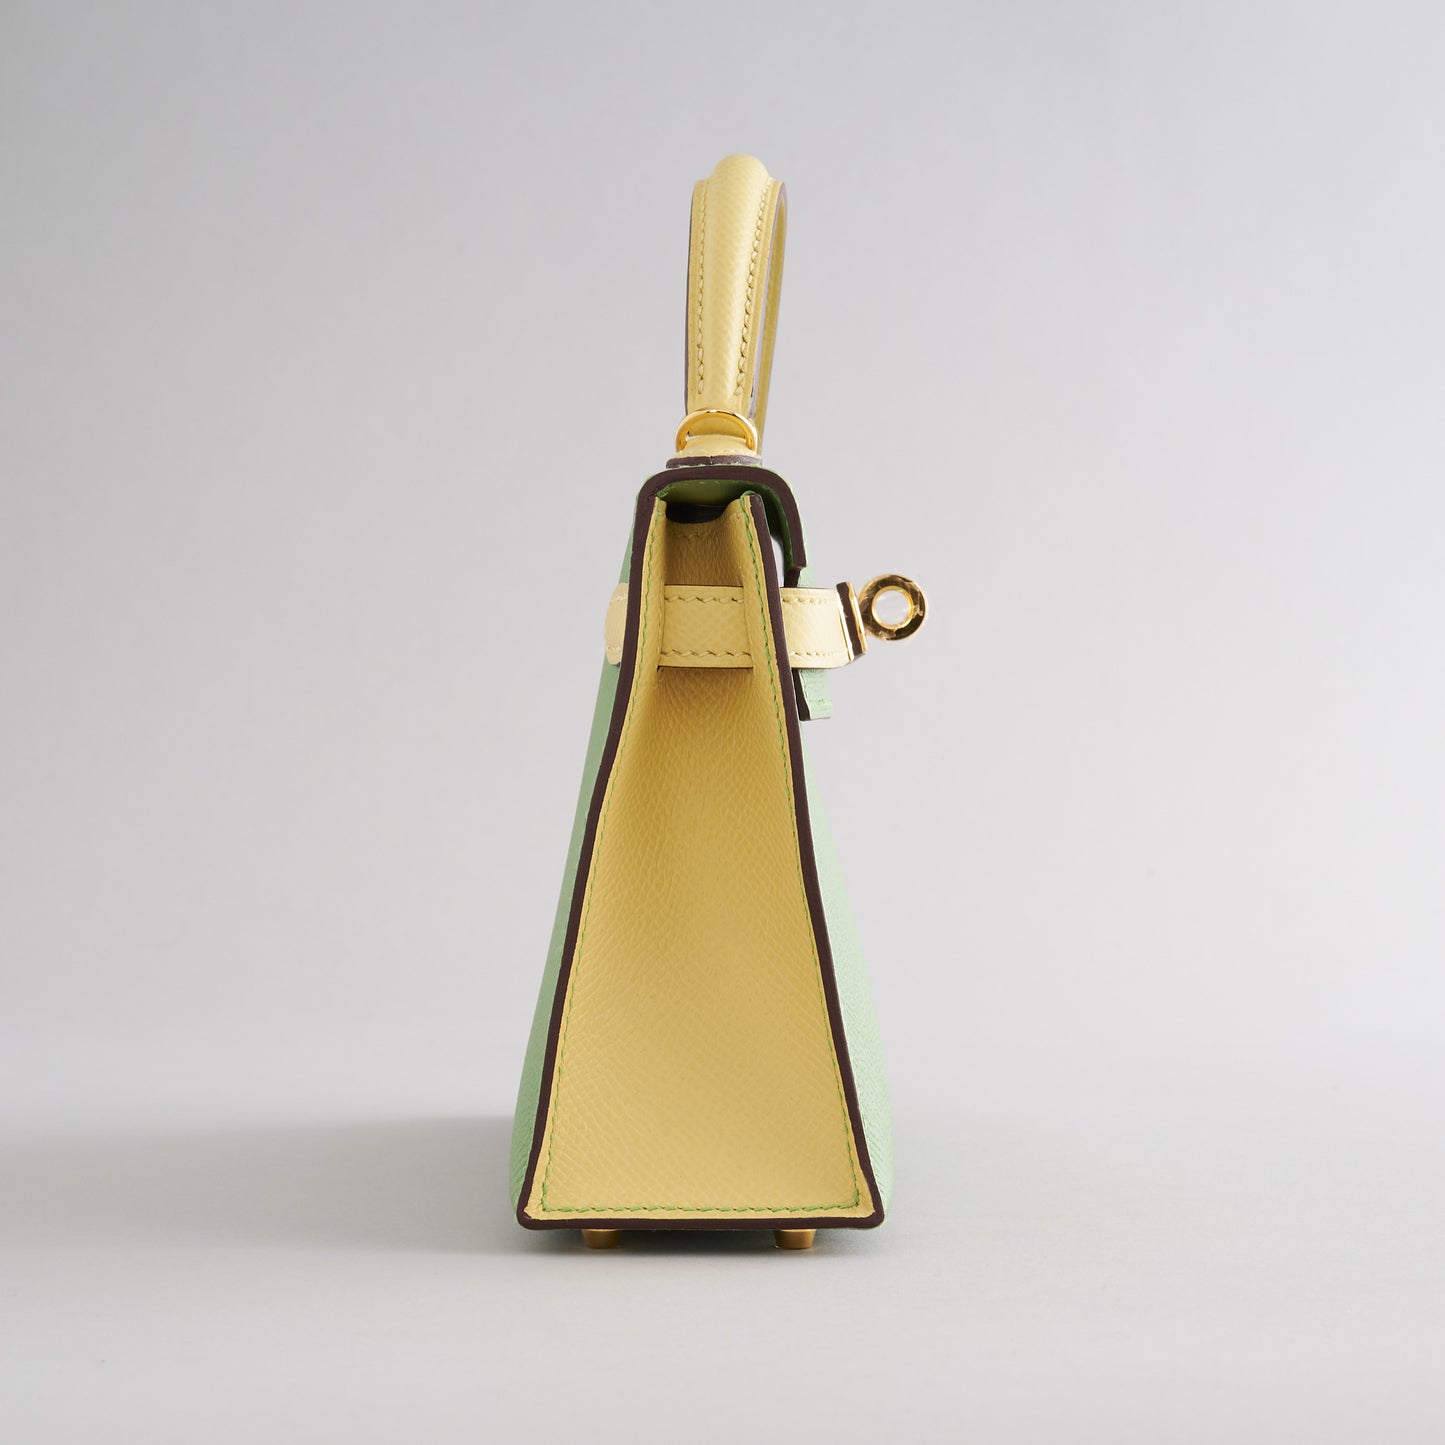 Hermès Kelly Mini Epsom Vert Criquet/Jaune Poussin Sellier HSS Gold Hardware